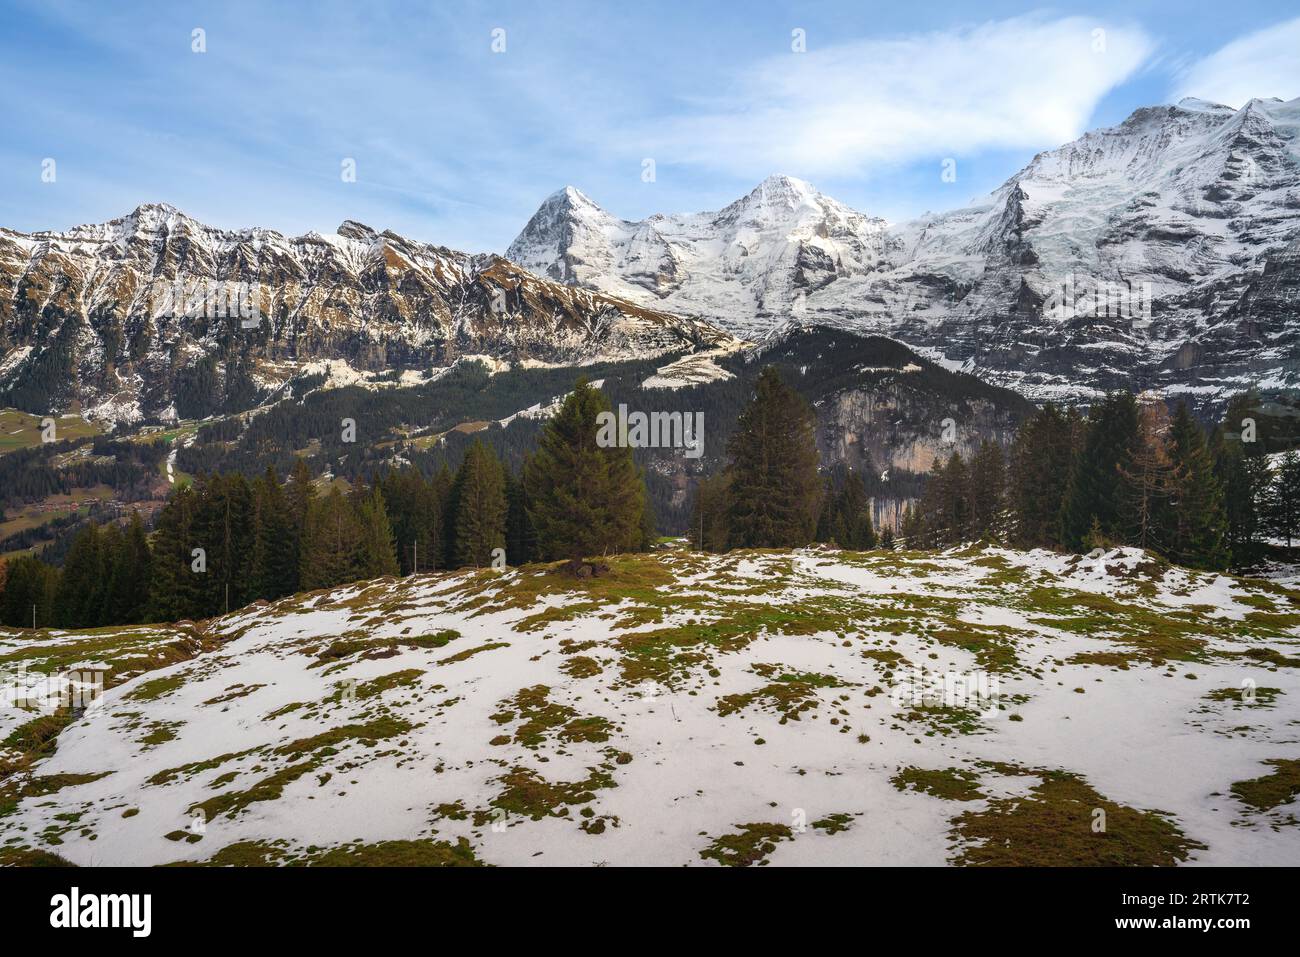 Tschuggen, Eiger and Monch and Jungfrau Mountains at Swiss Alps - Lauterbrunnen, Switzerland Stock Photo